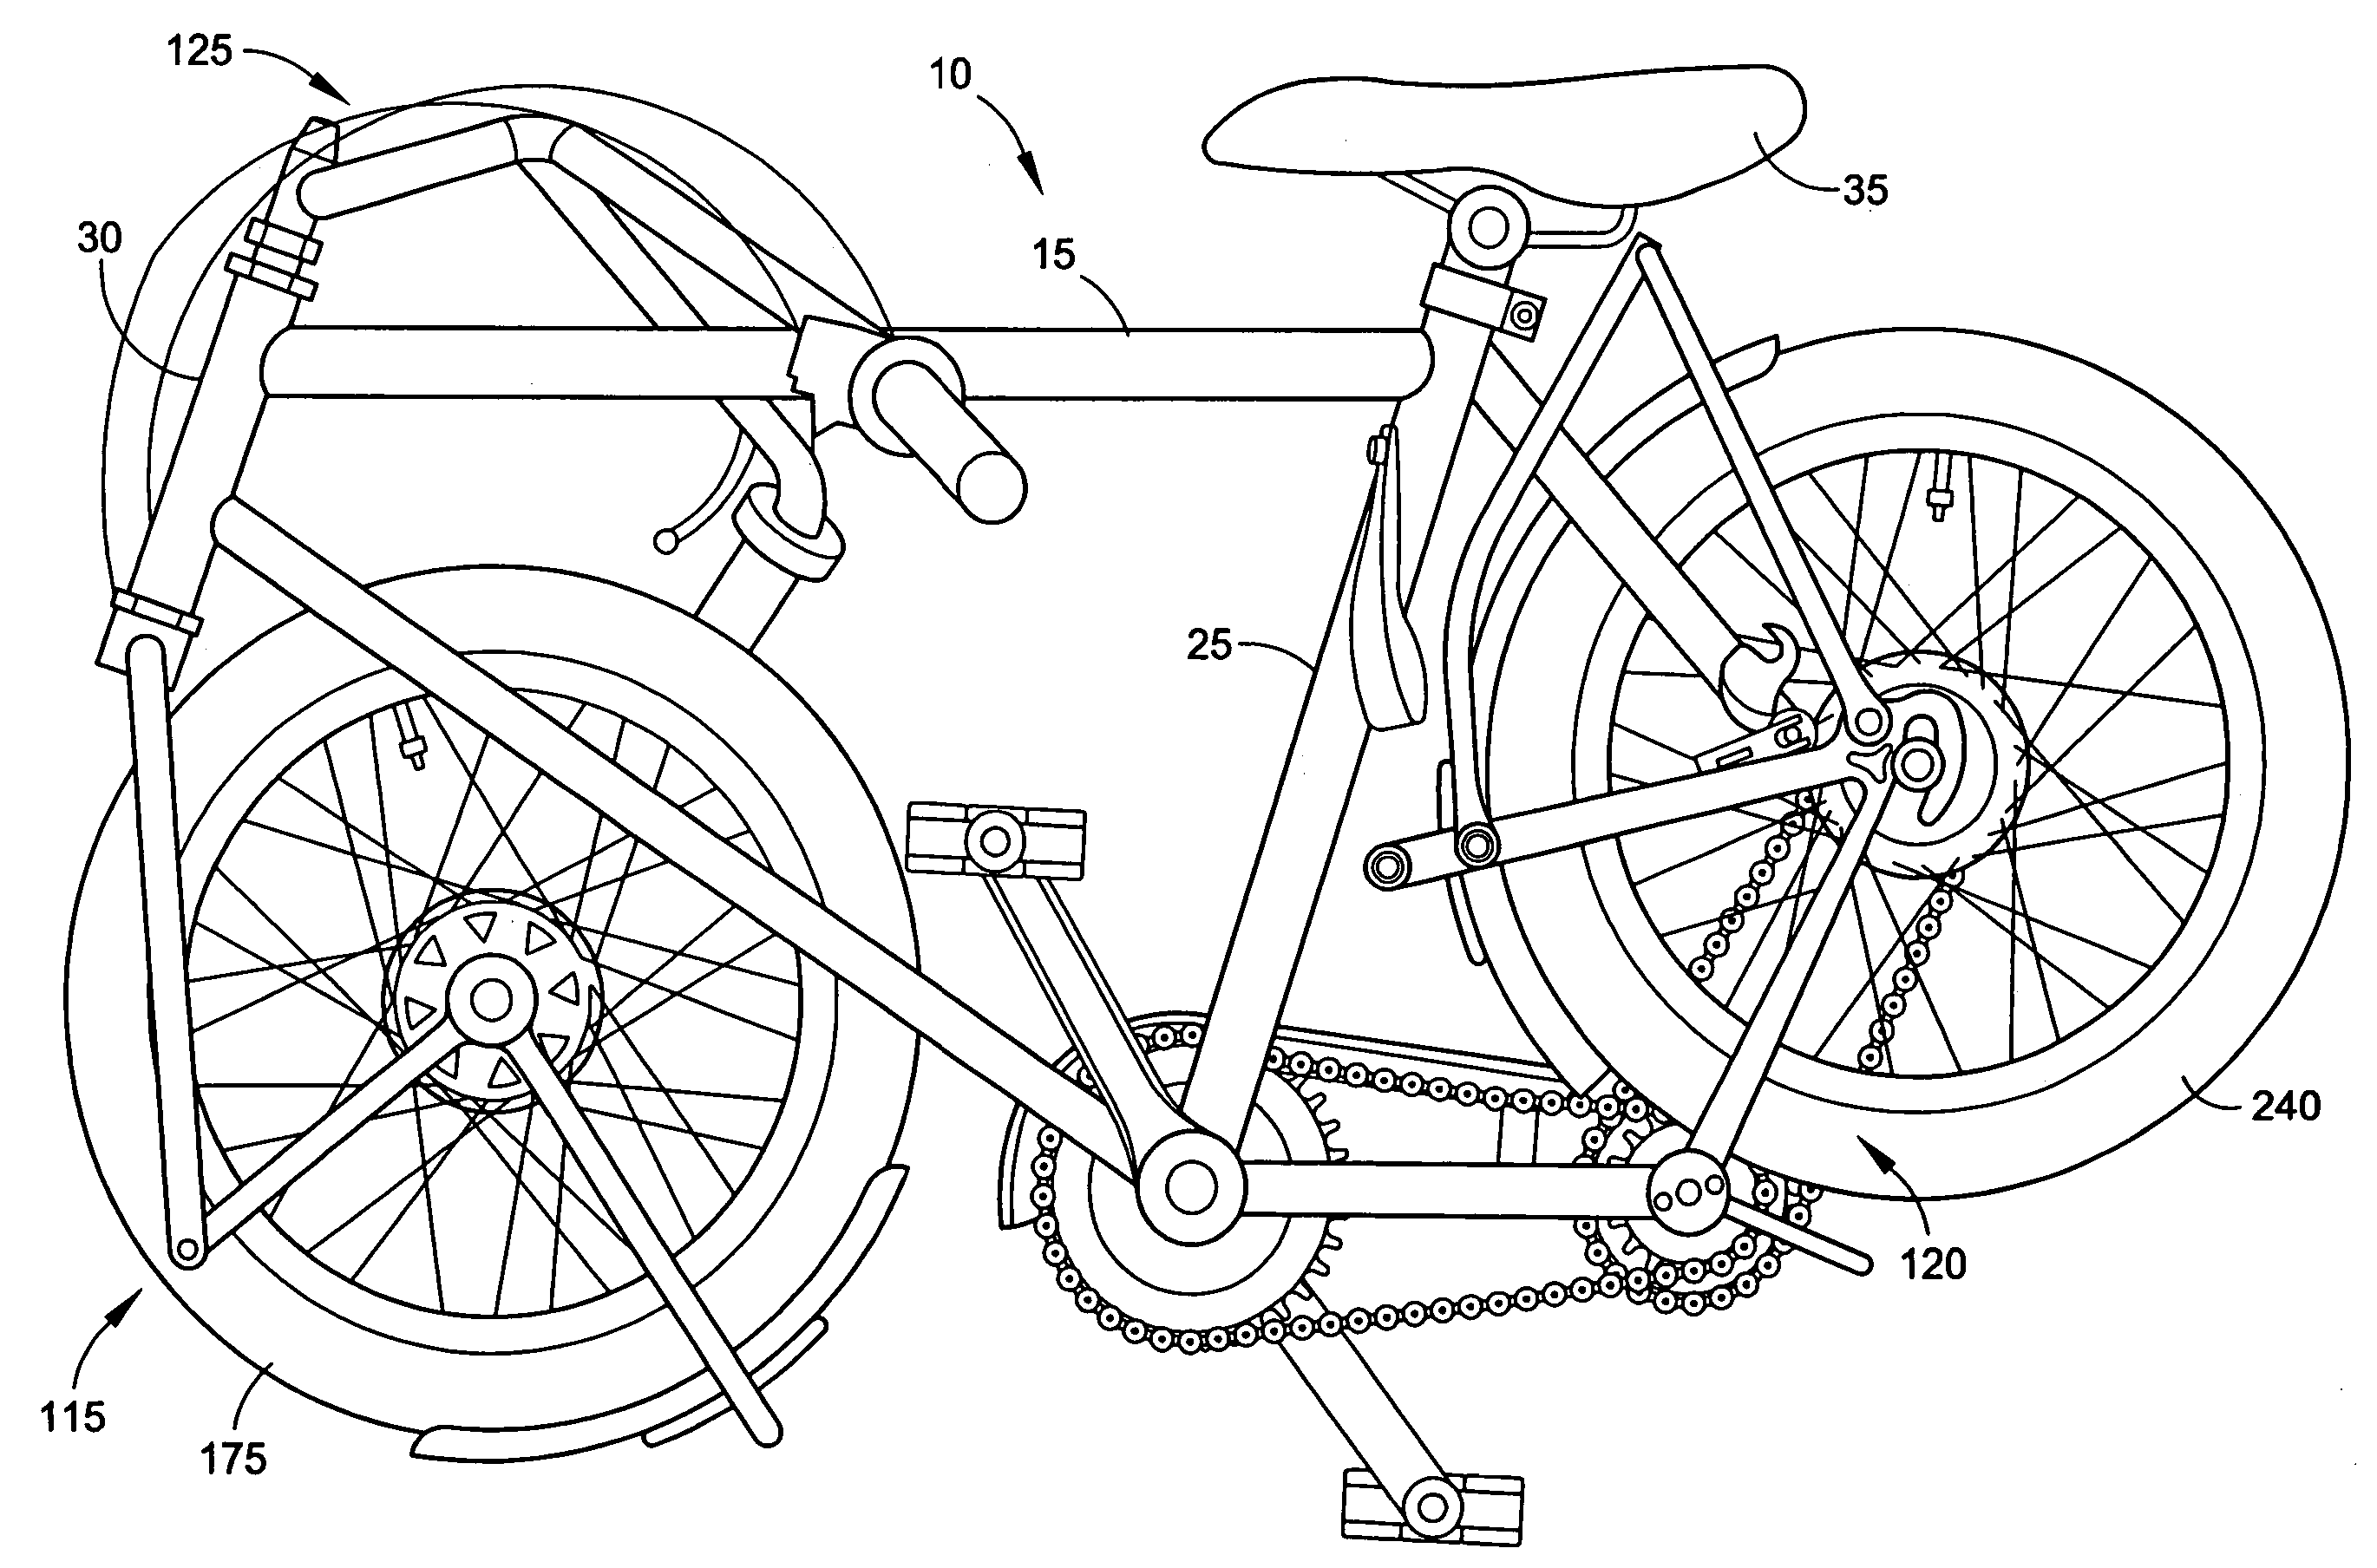 Folding bicycle